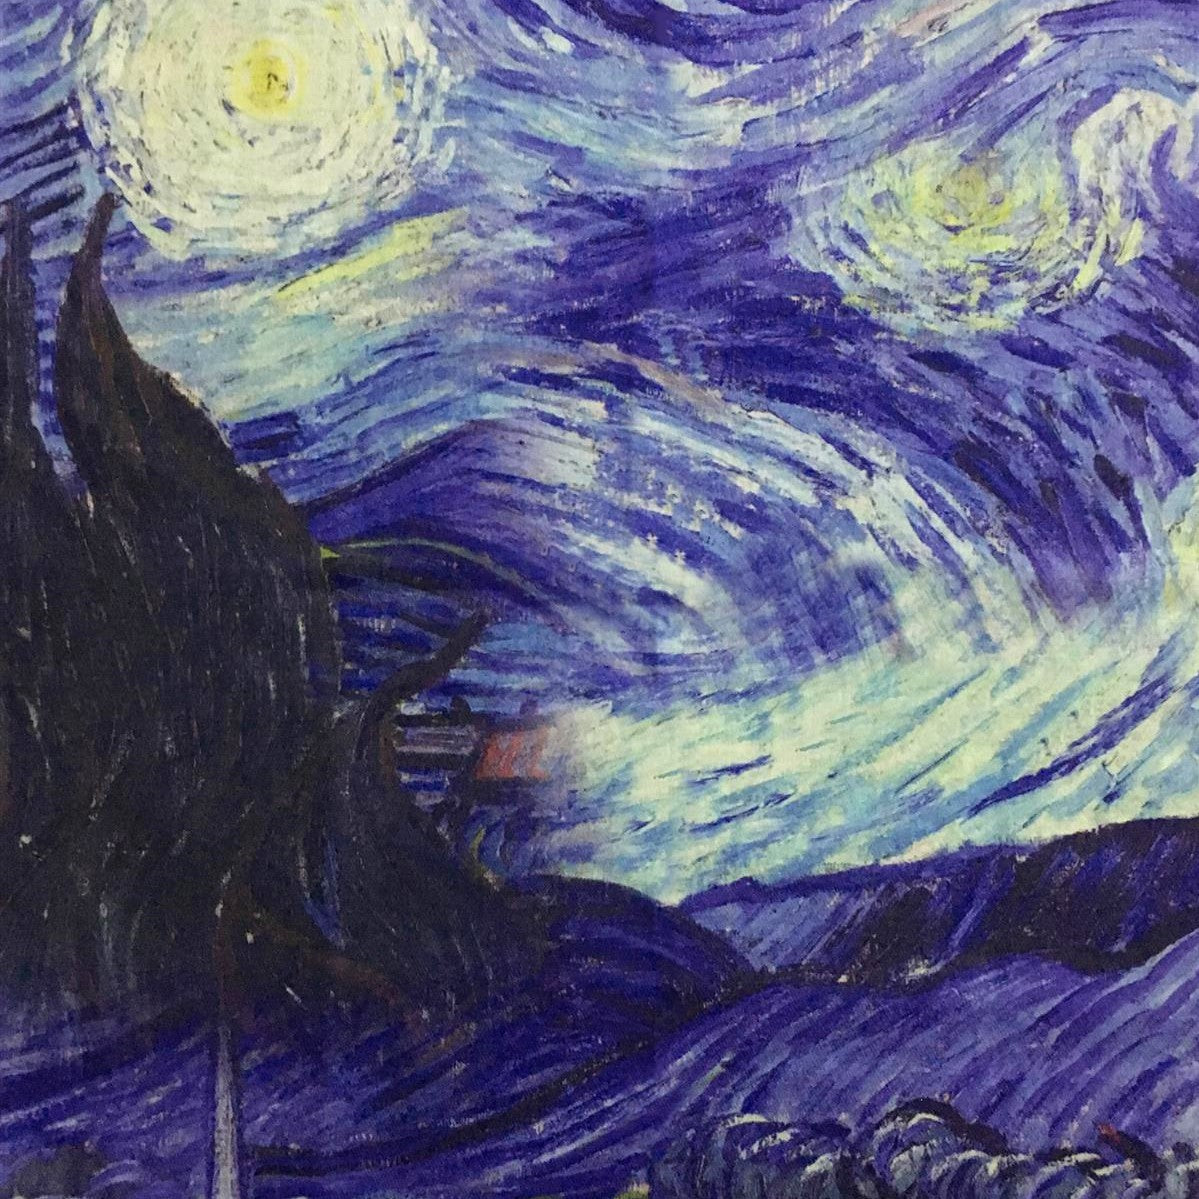 Bufanda de lana, 70 cm x 180 cm, Van Gogh - Starry Night